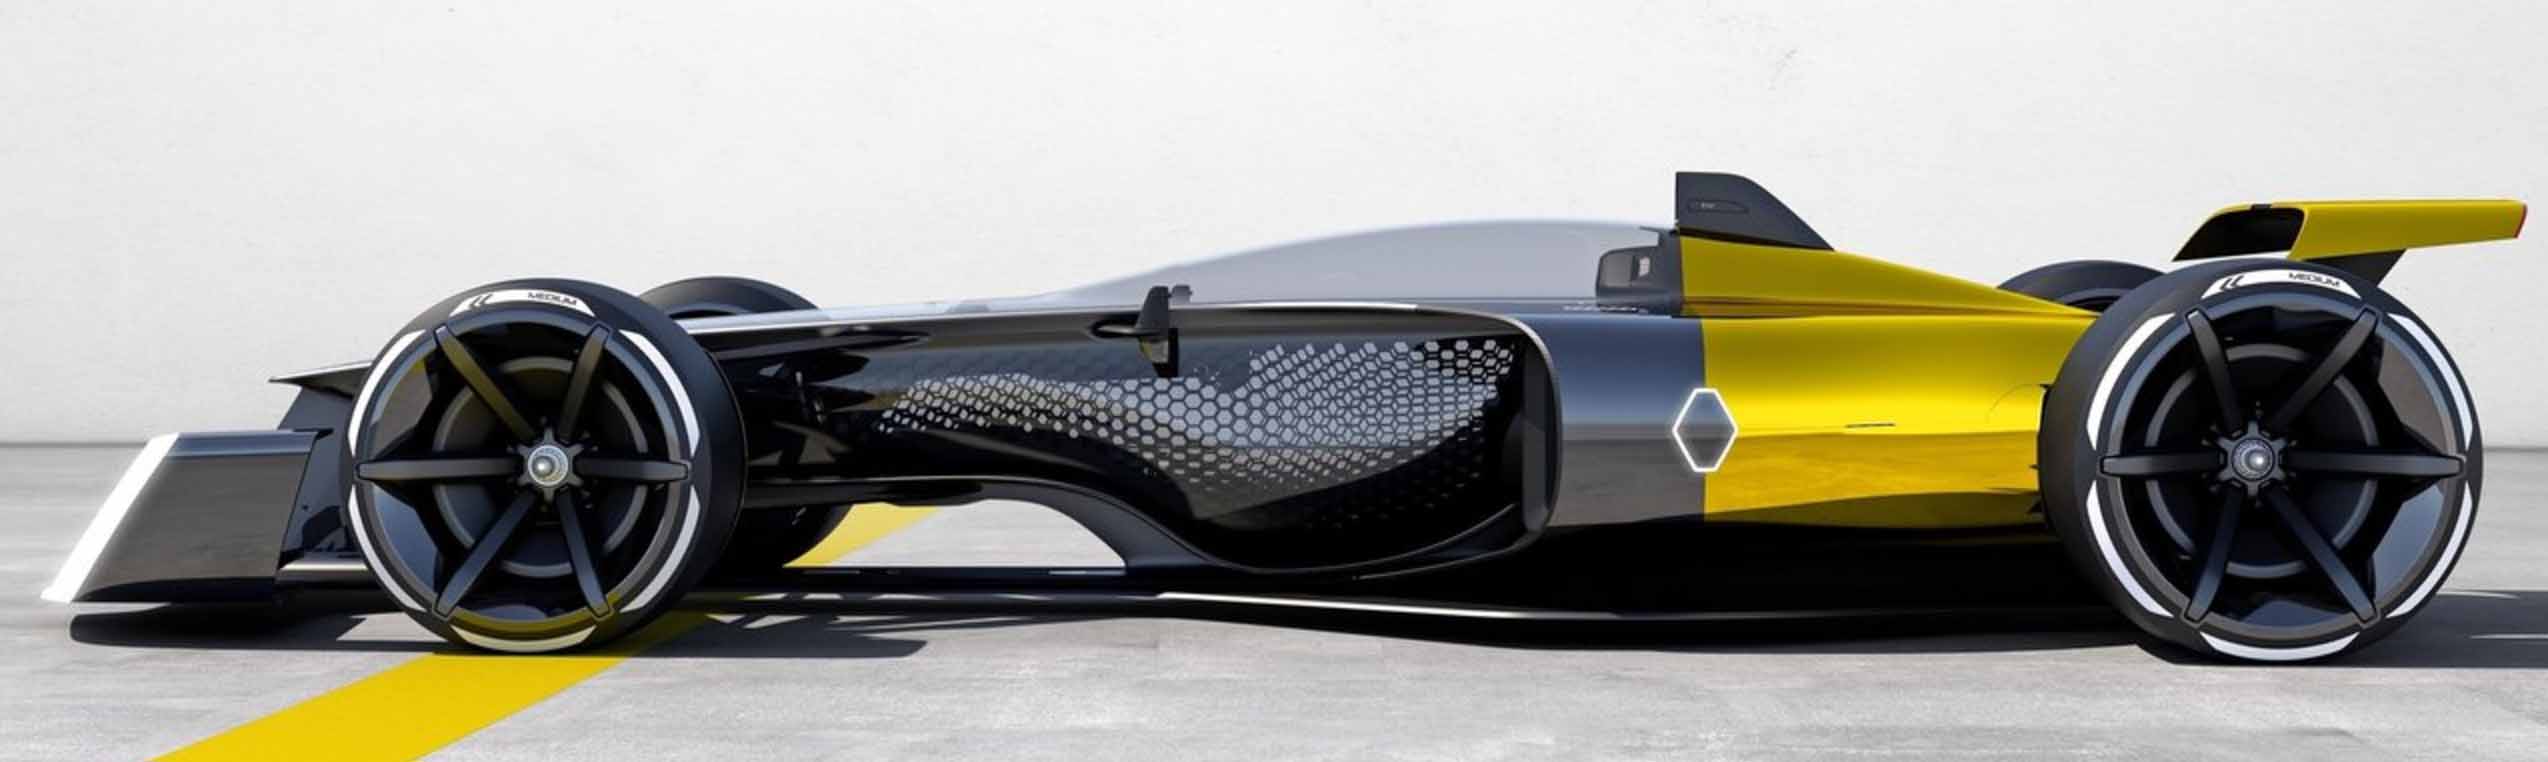 Renault Sport R.S. 2027 Vision